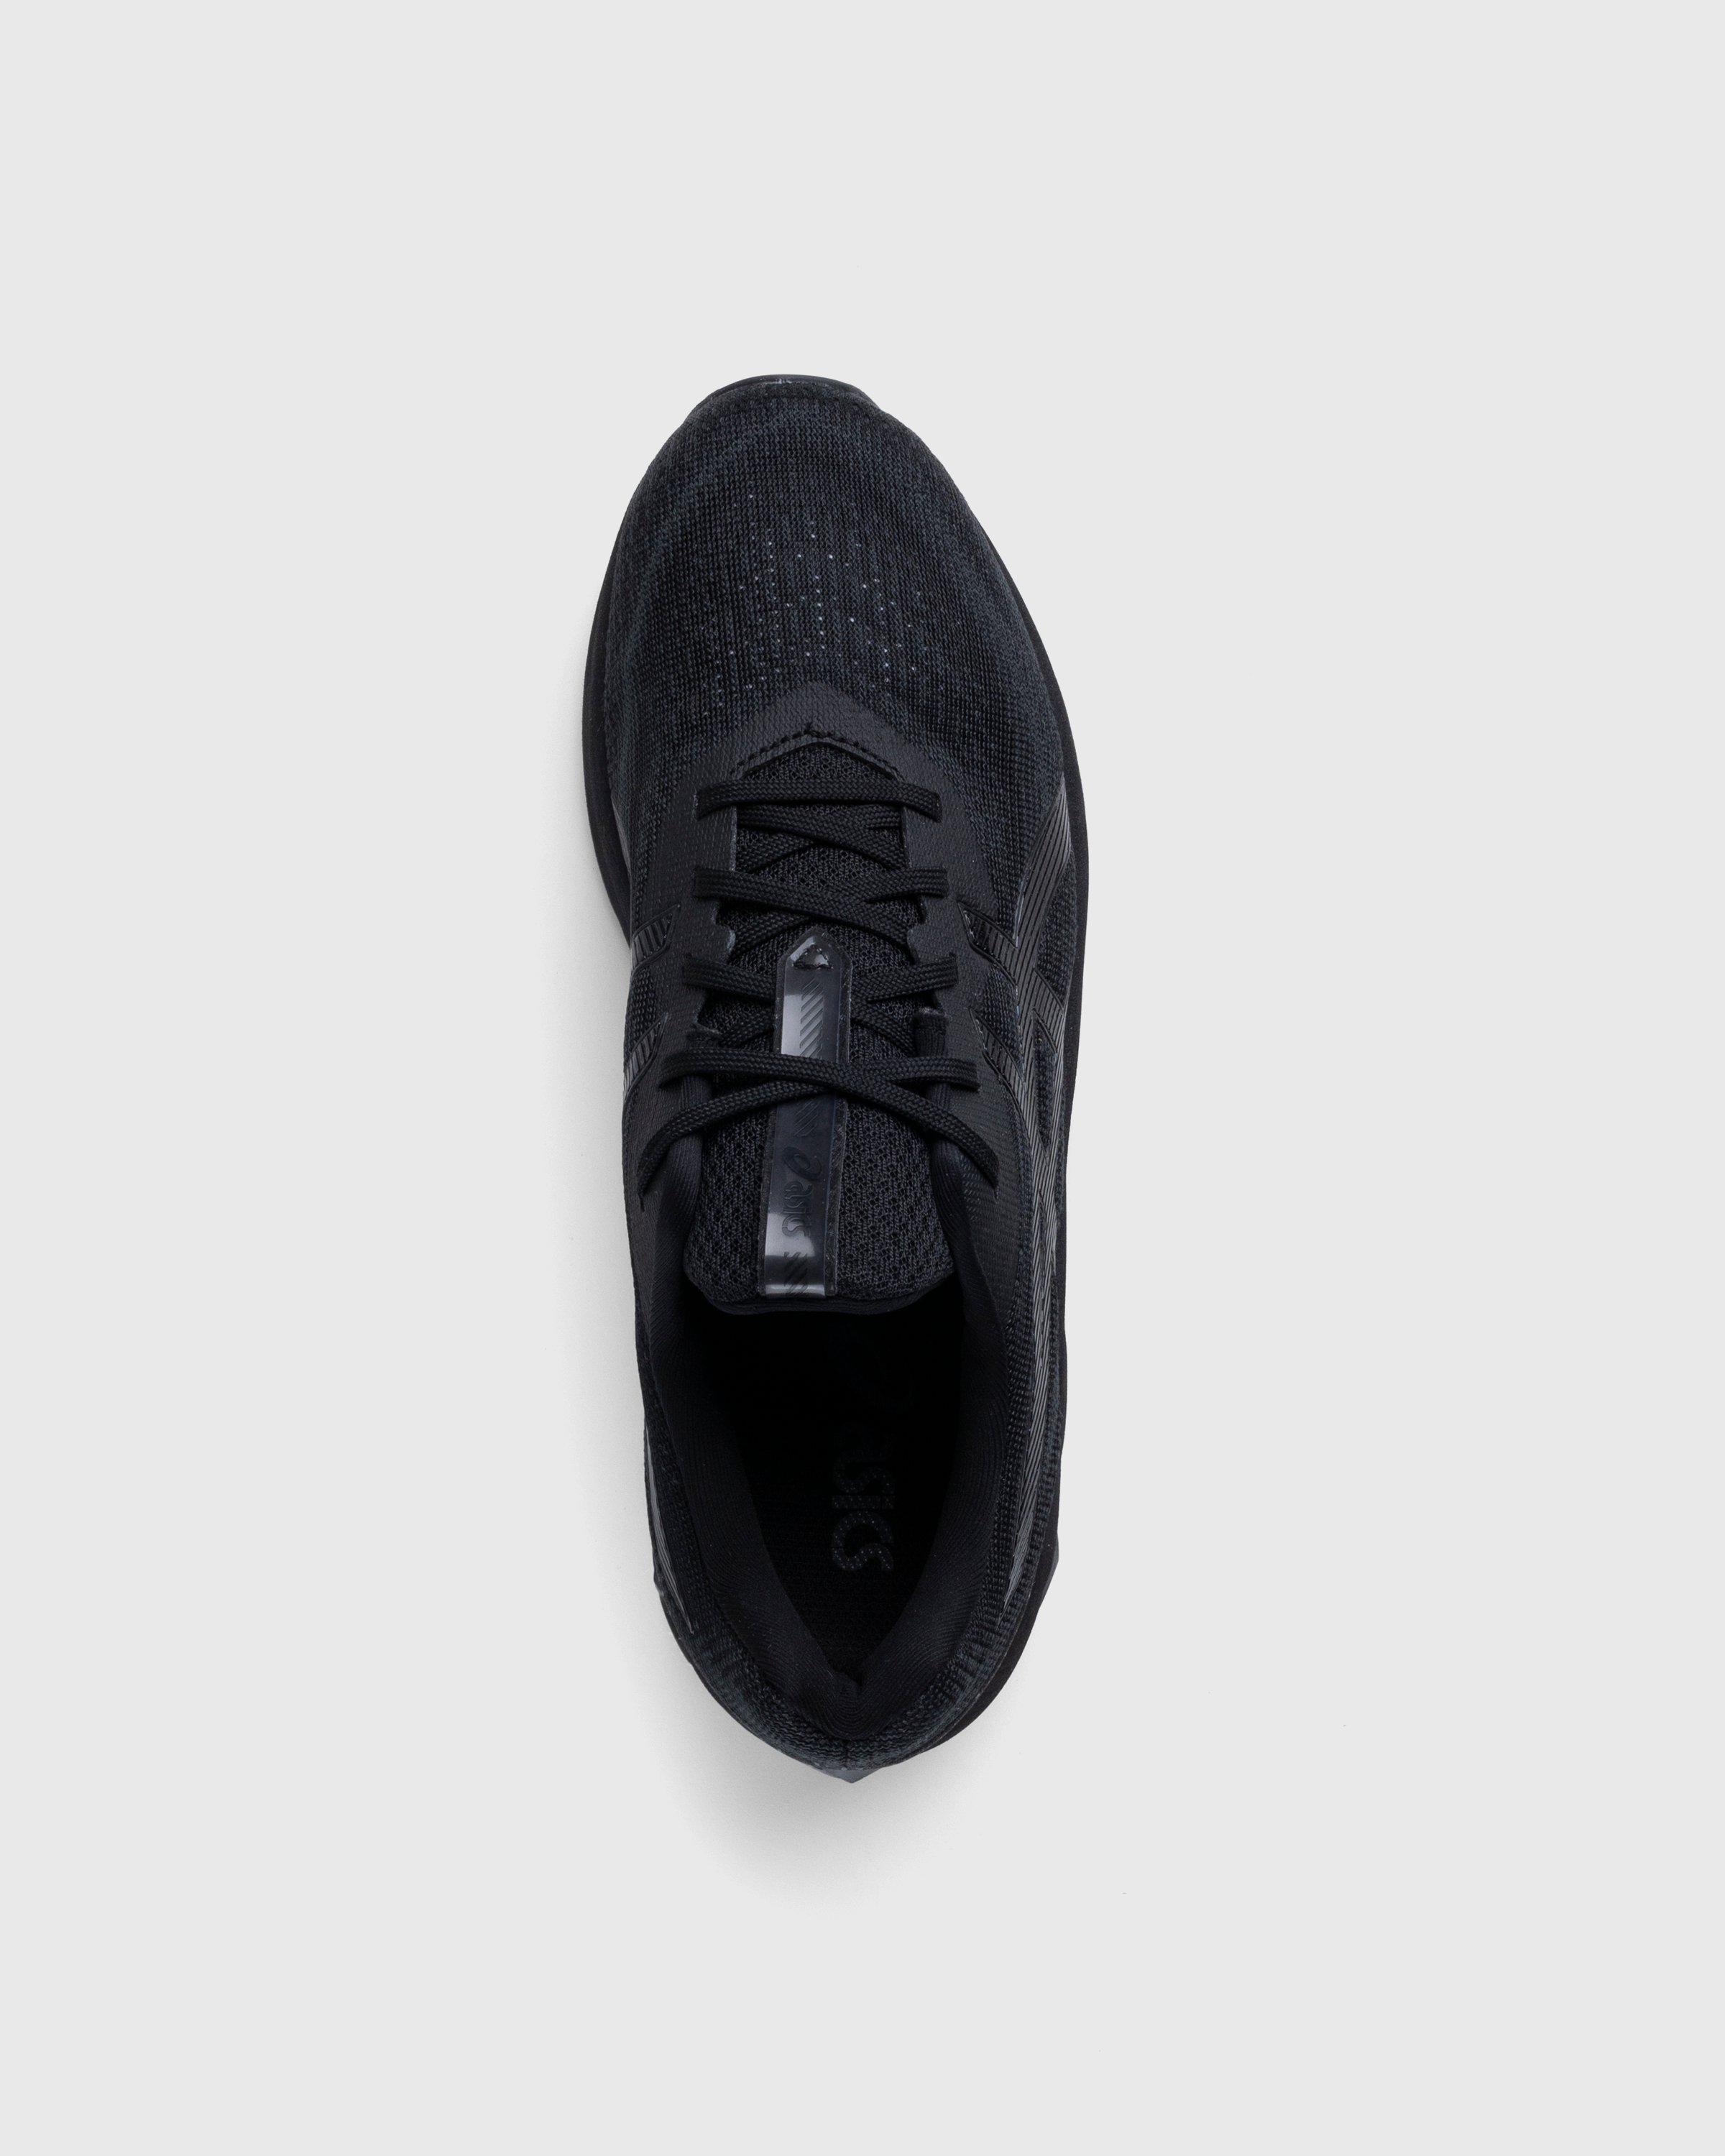 asics - Gel-Quantum 180 VII Black/Black - Footwear - Black - Image 5